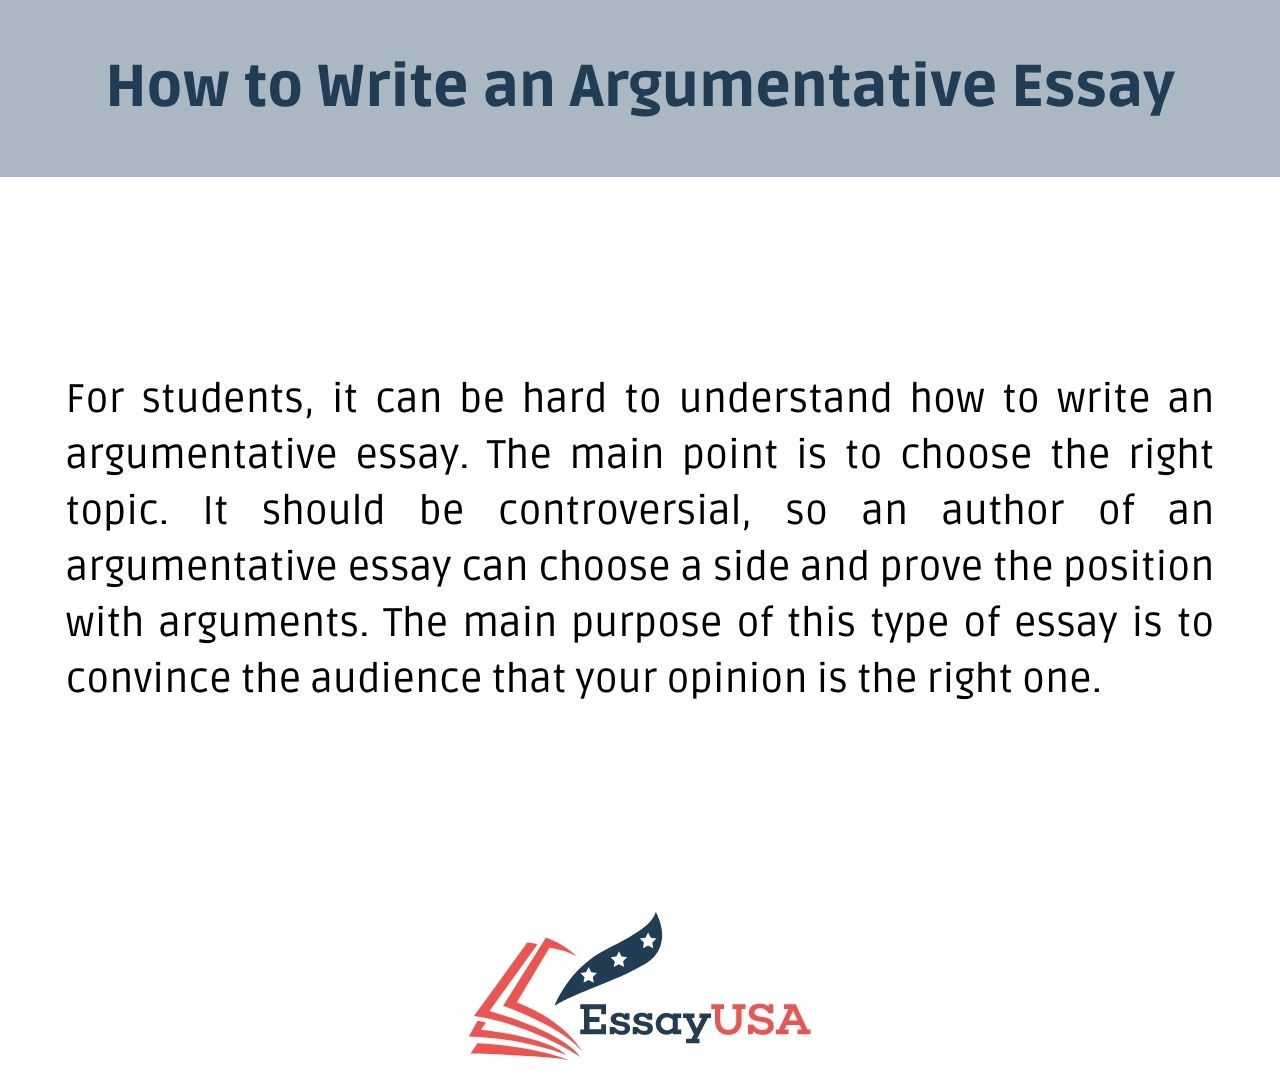 Basics of writing an argumentative essay